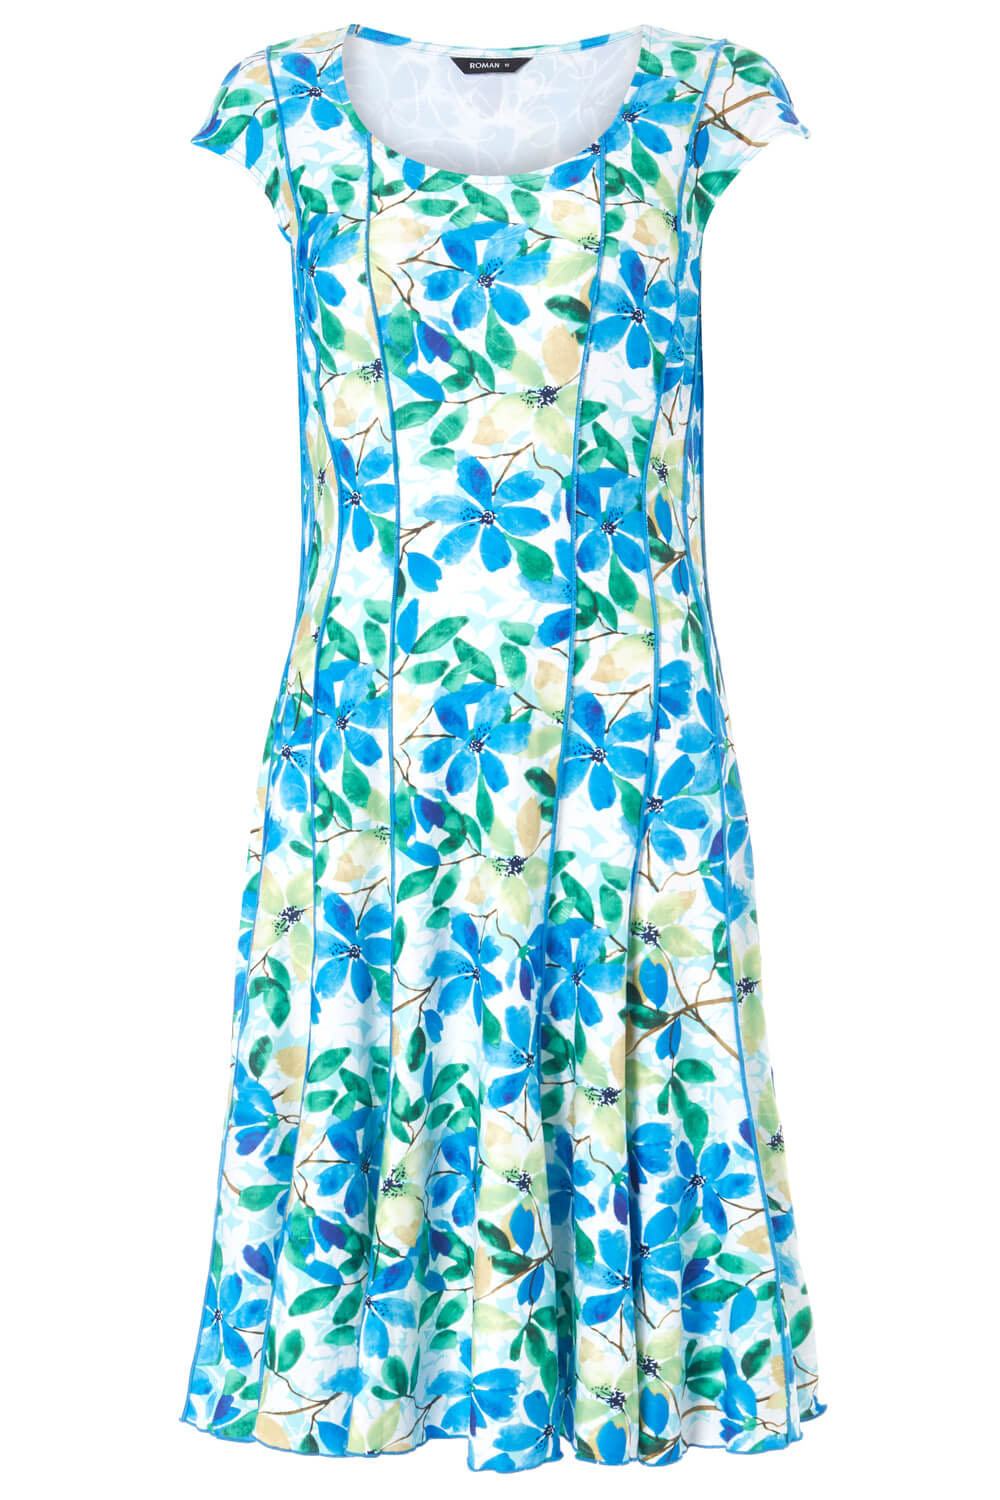 Blue Floral Garden Print Panel Dress, Image 6 of 6